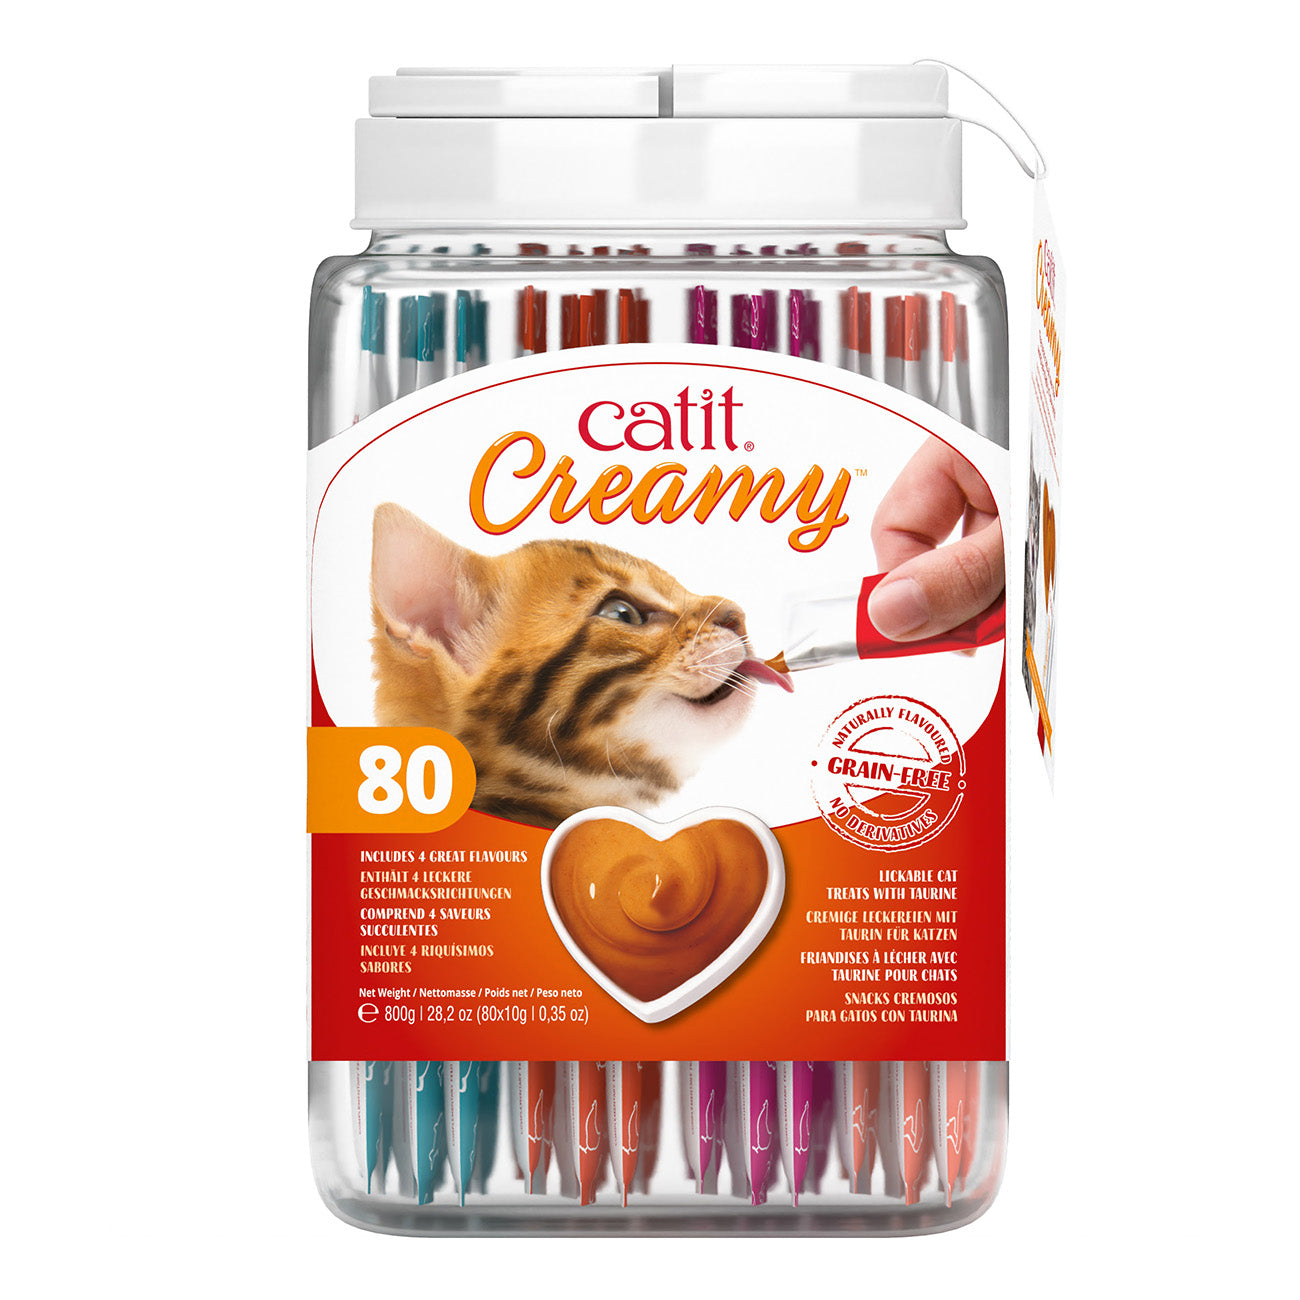 Catit Creamy All Natural Cat Treats GIFT JAR 80 Treats